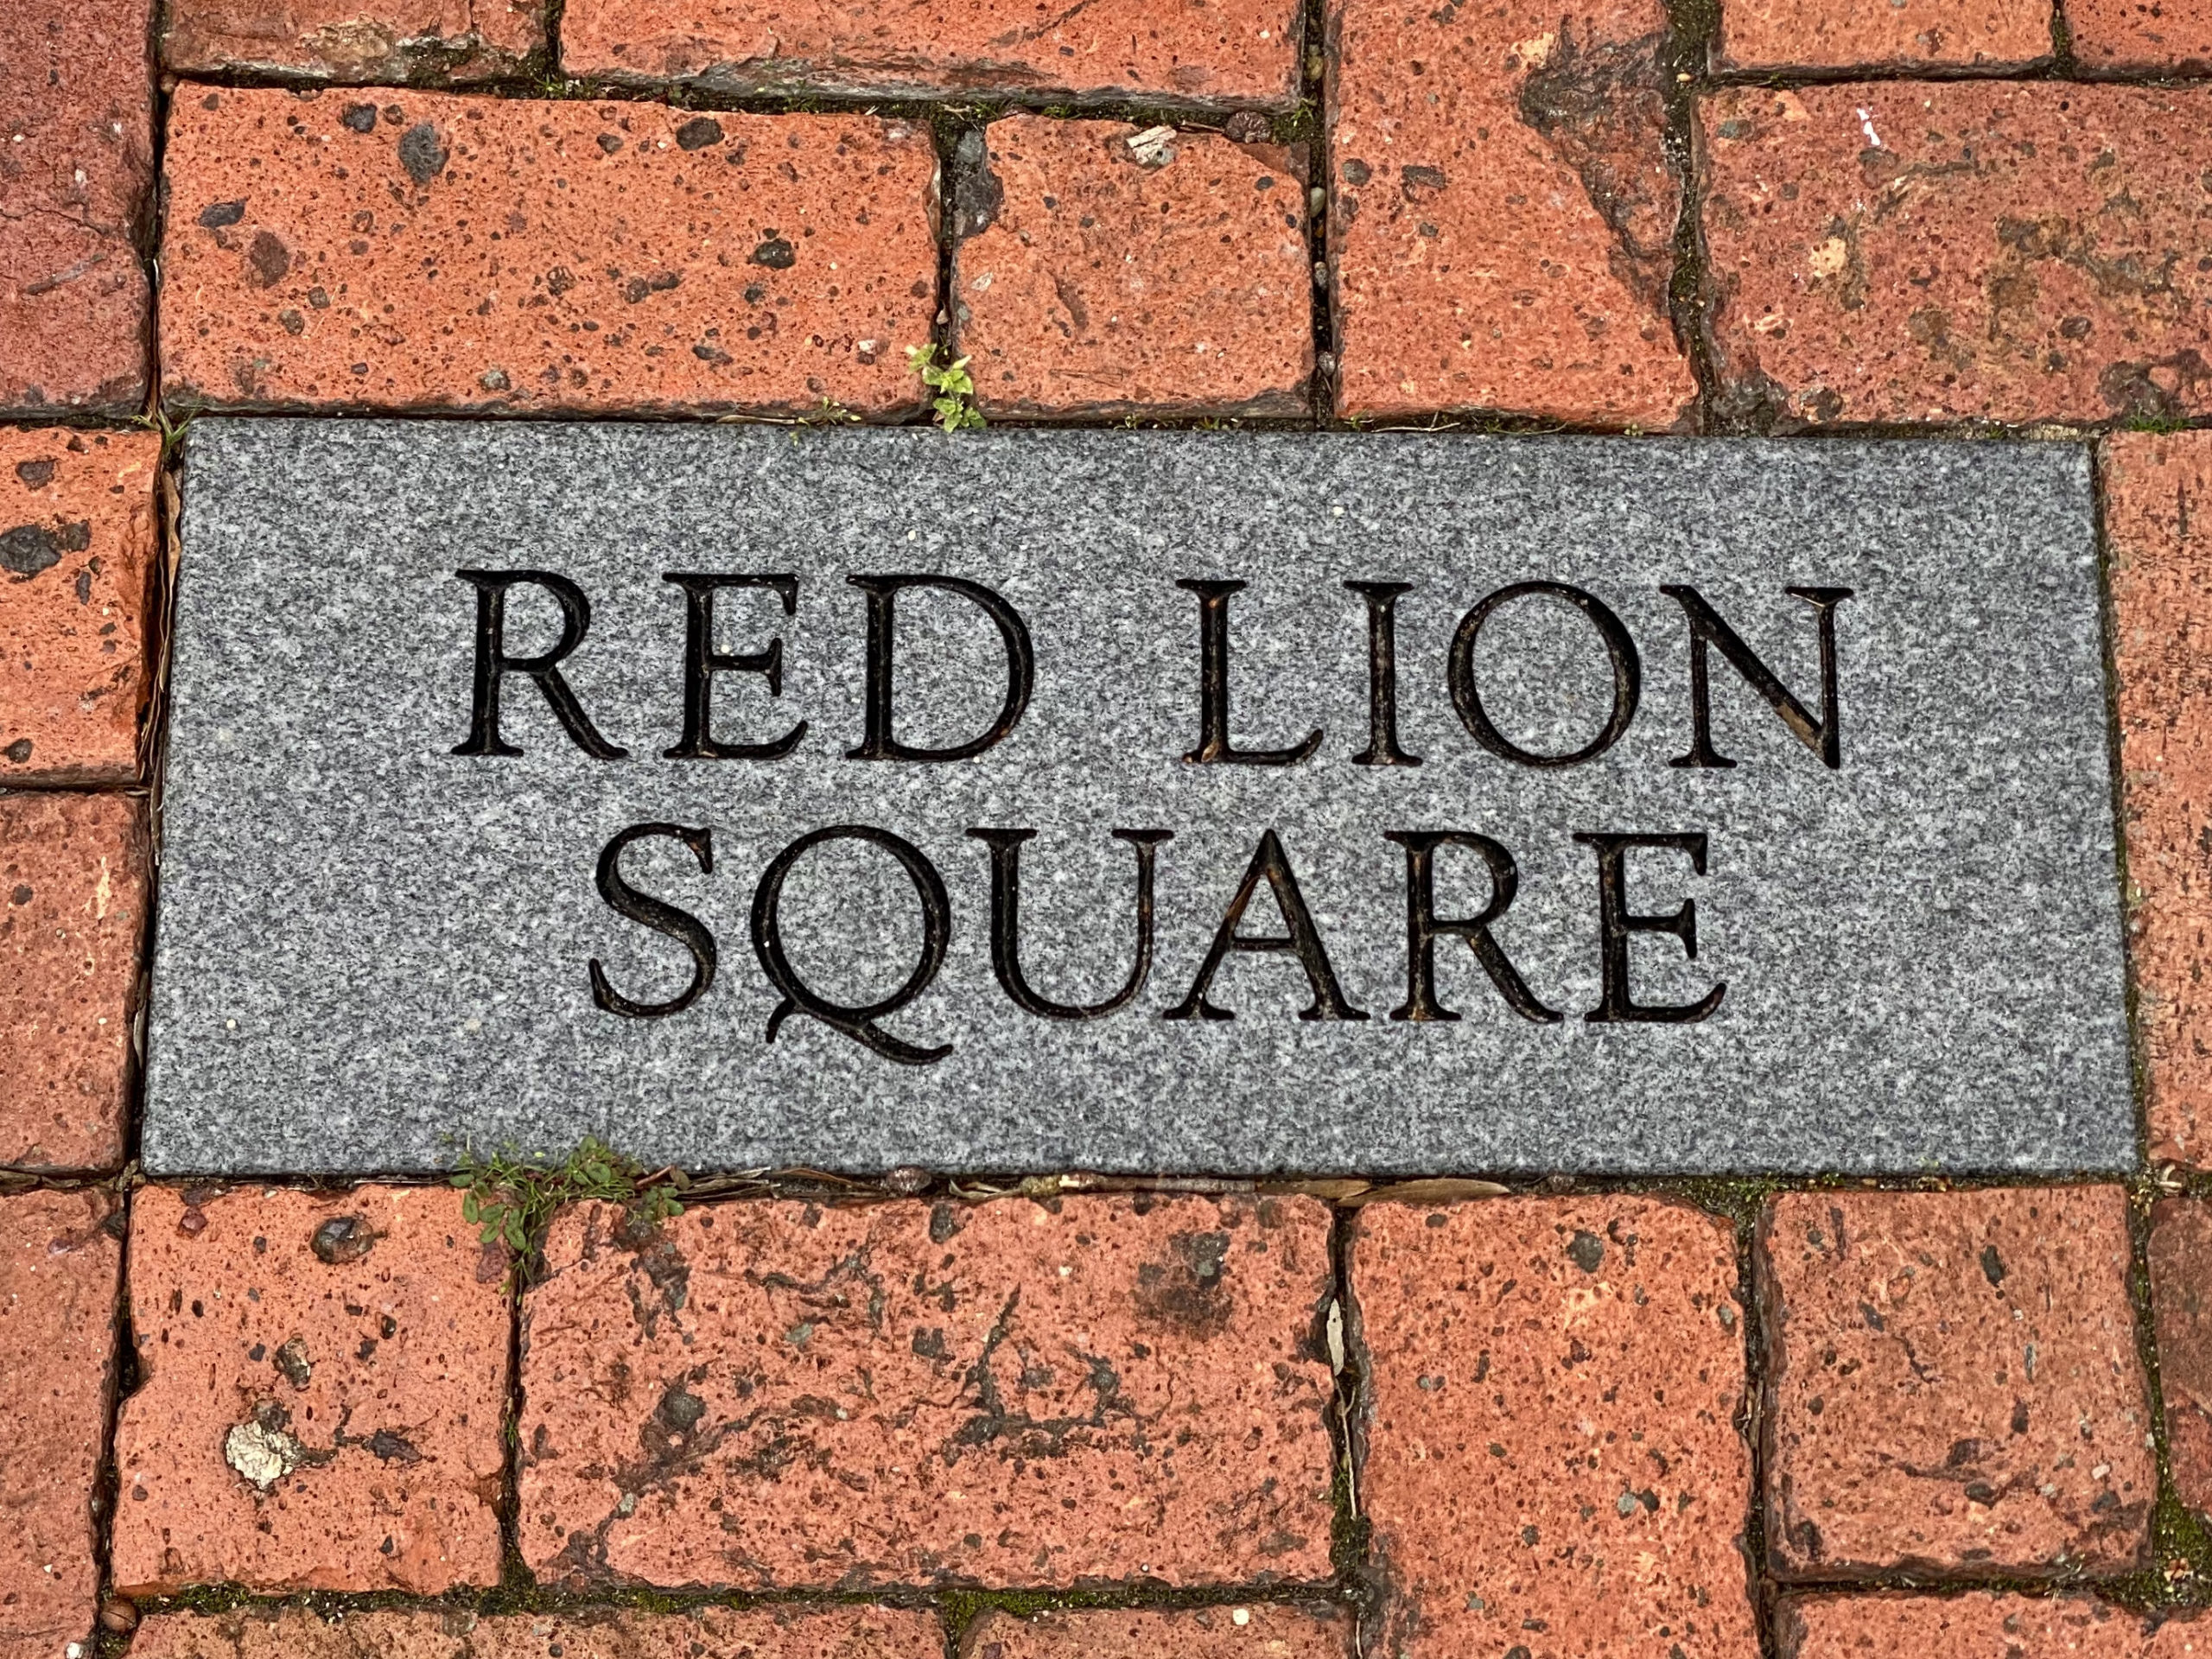 Historic Red Lion Square Marker